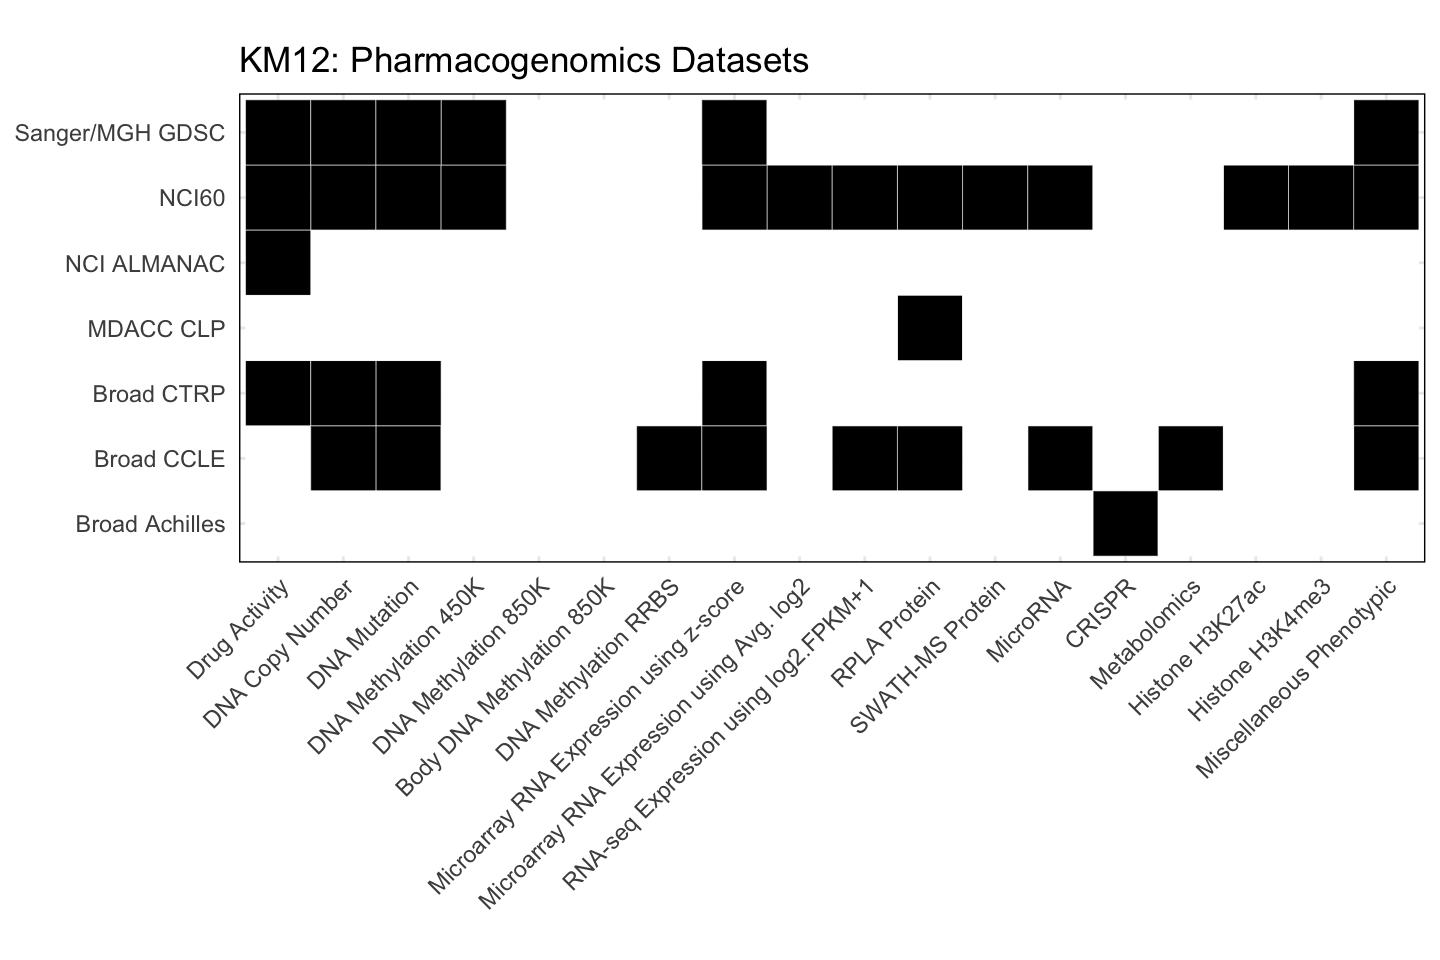 Cell Line KM12 Available Pharmacogenomics Datasets